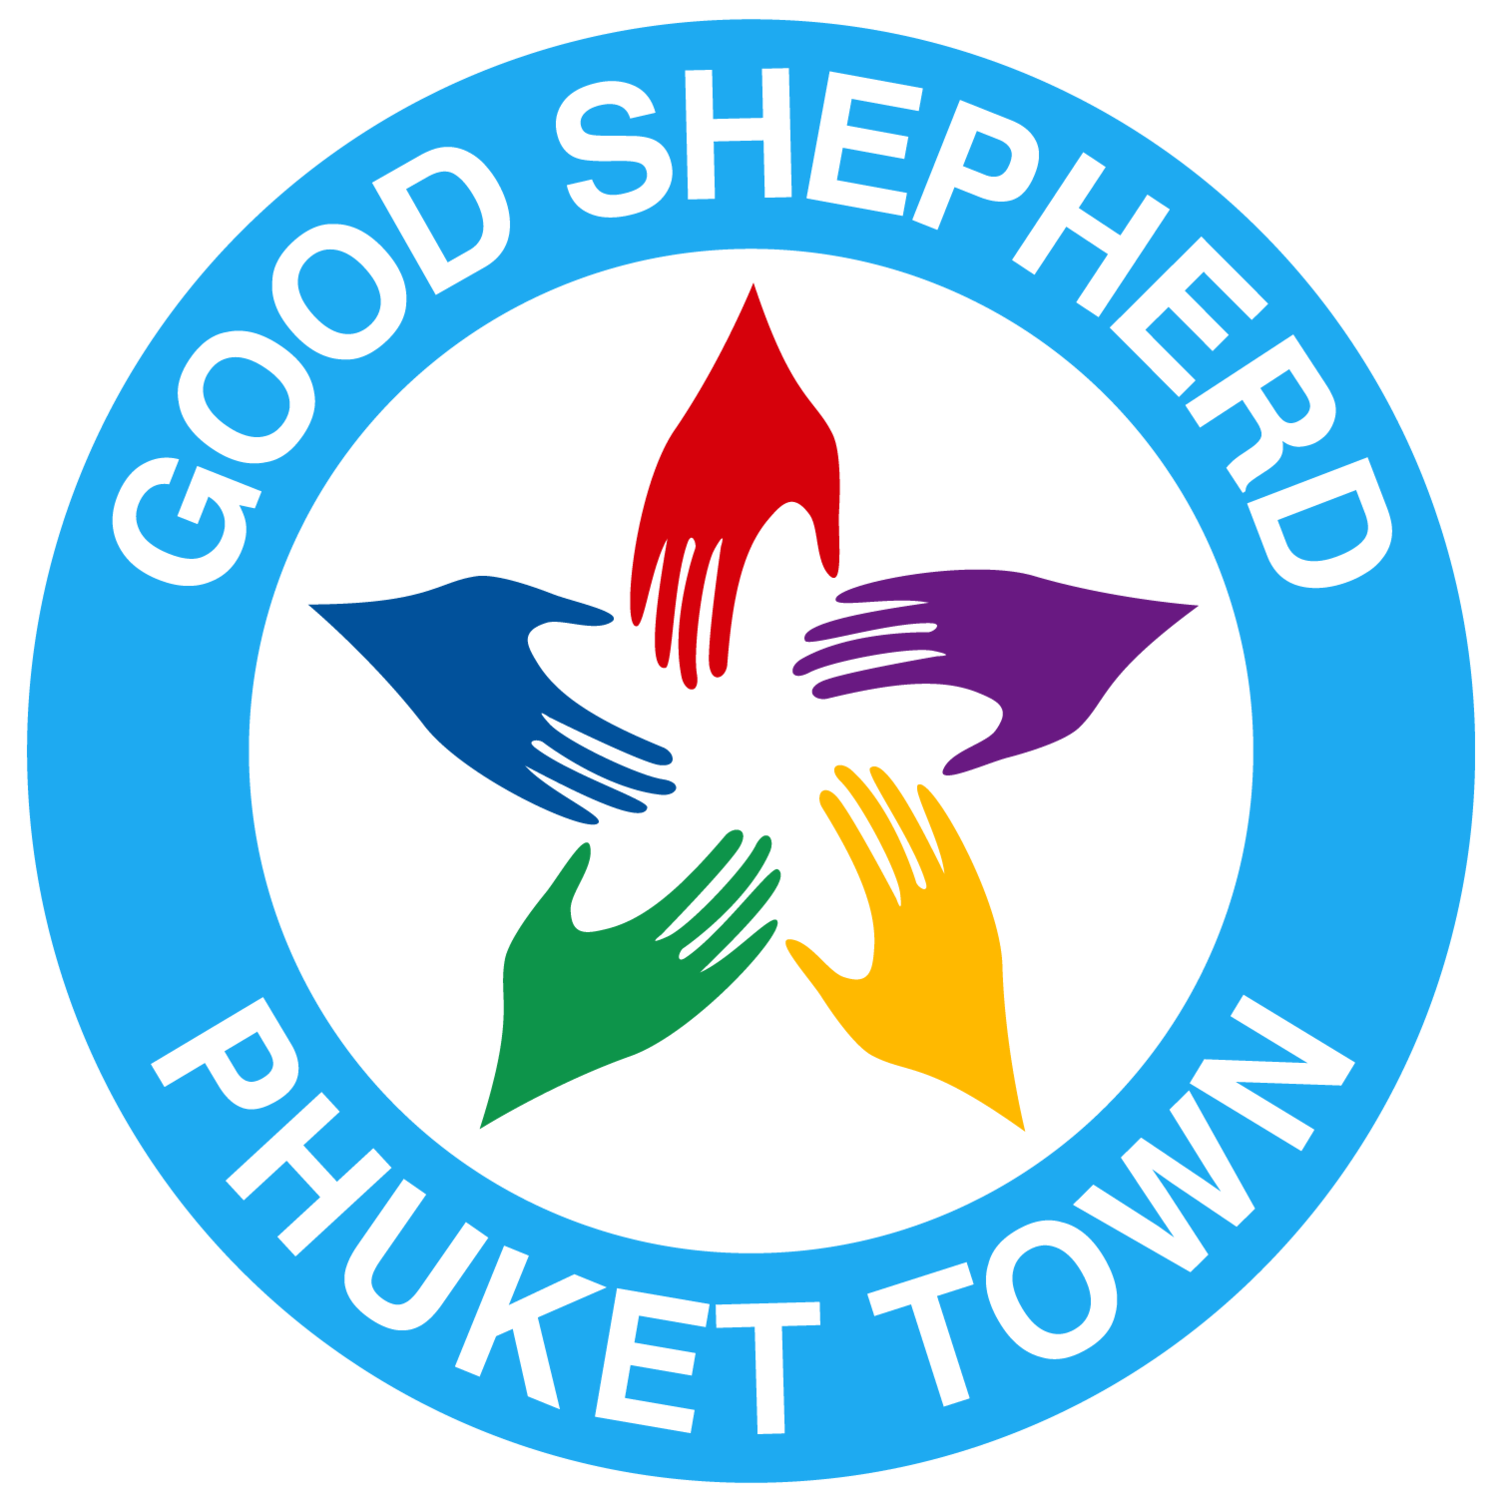 Good Shepherd Phuket Town